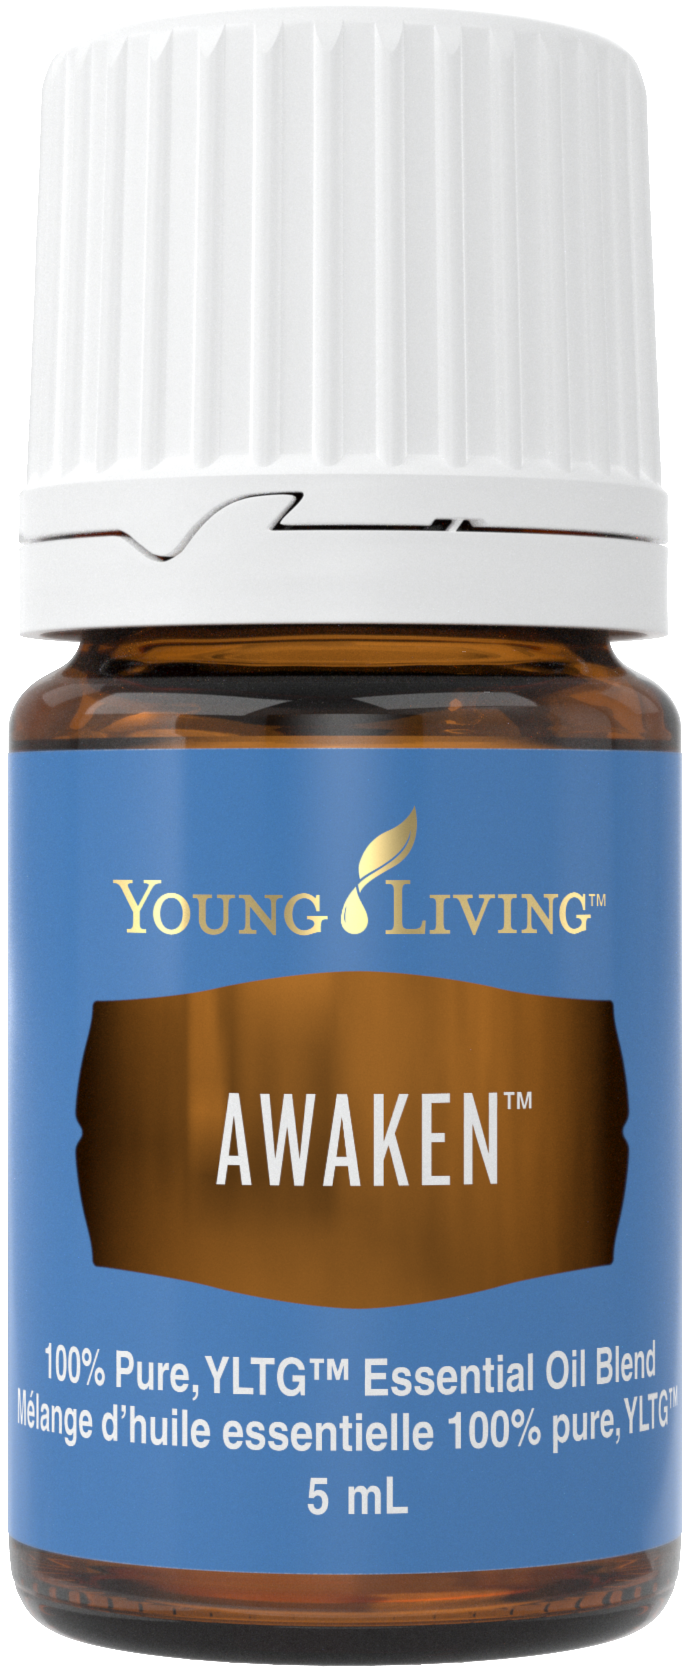 YL - Essential Oil Blend - Awaken